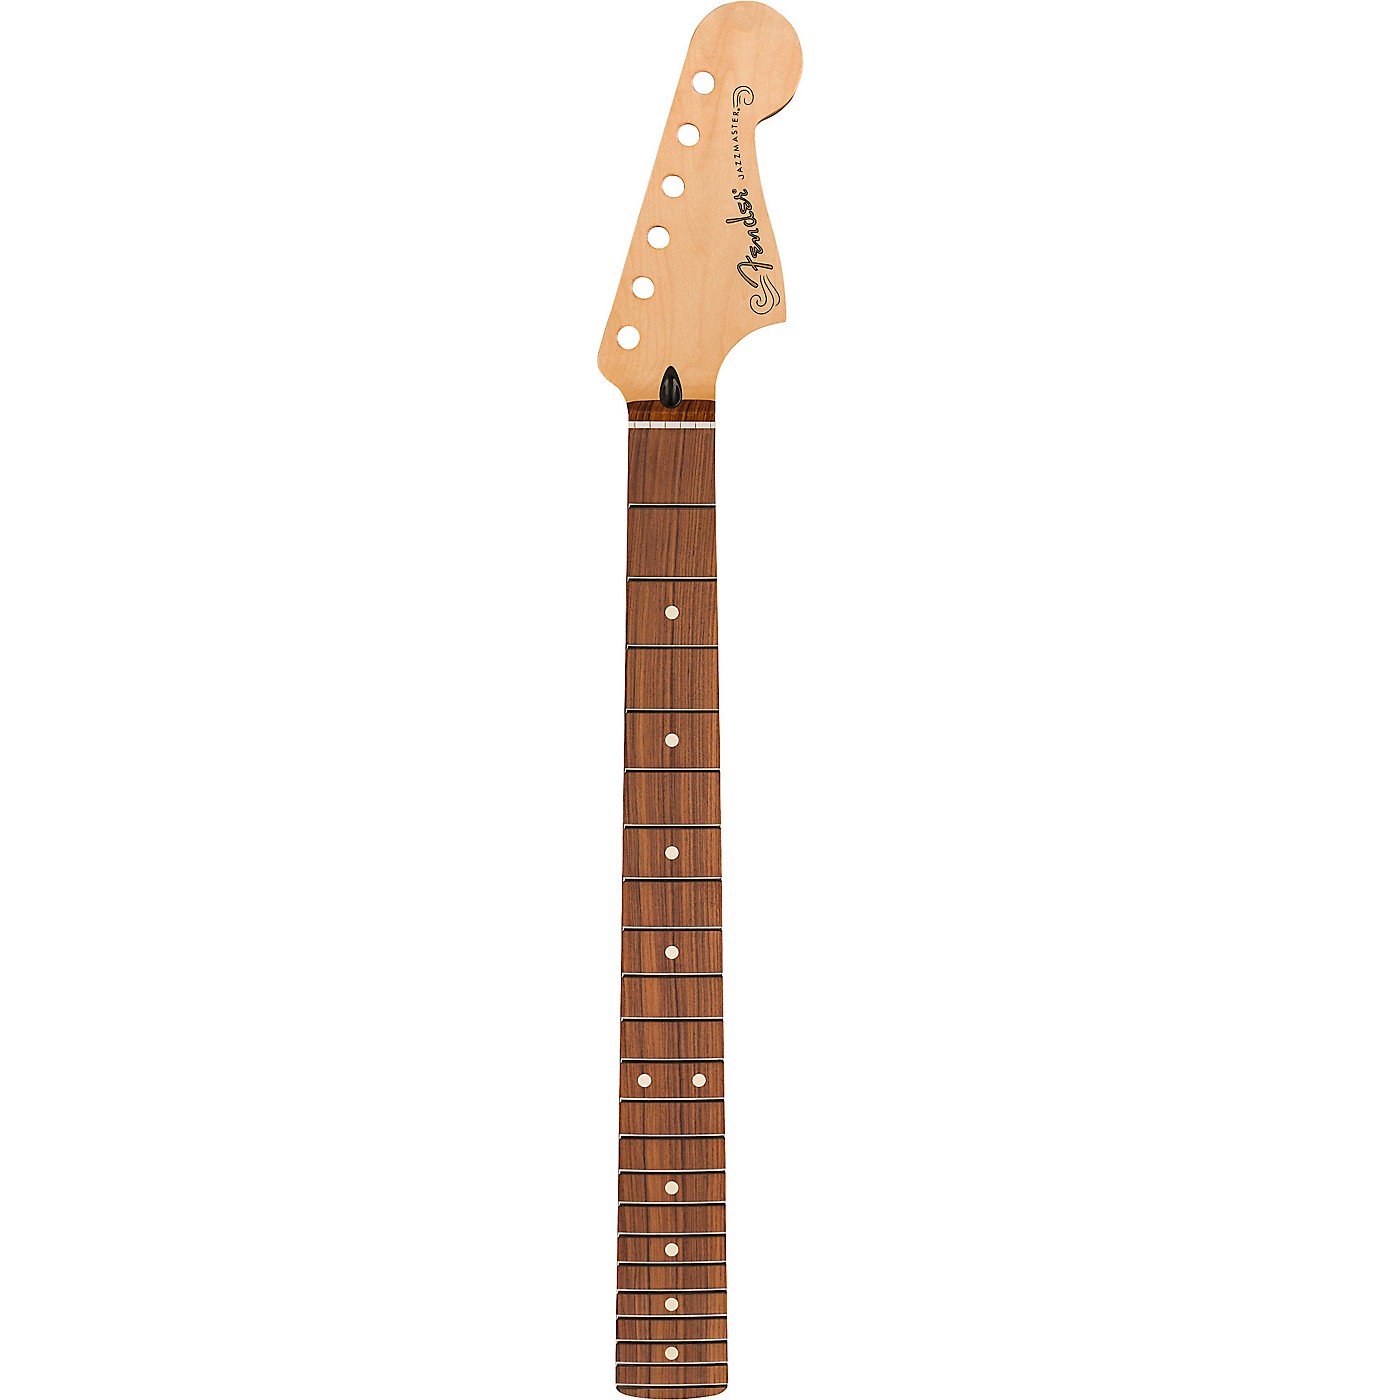 Fender Player Series Jazzmaster Neck, 22 Medium-Jumbo Frets, 9.5